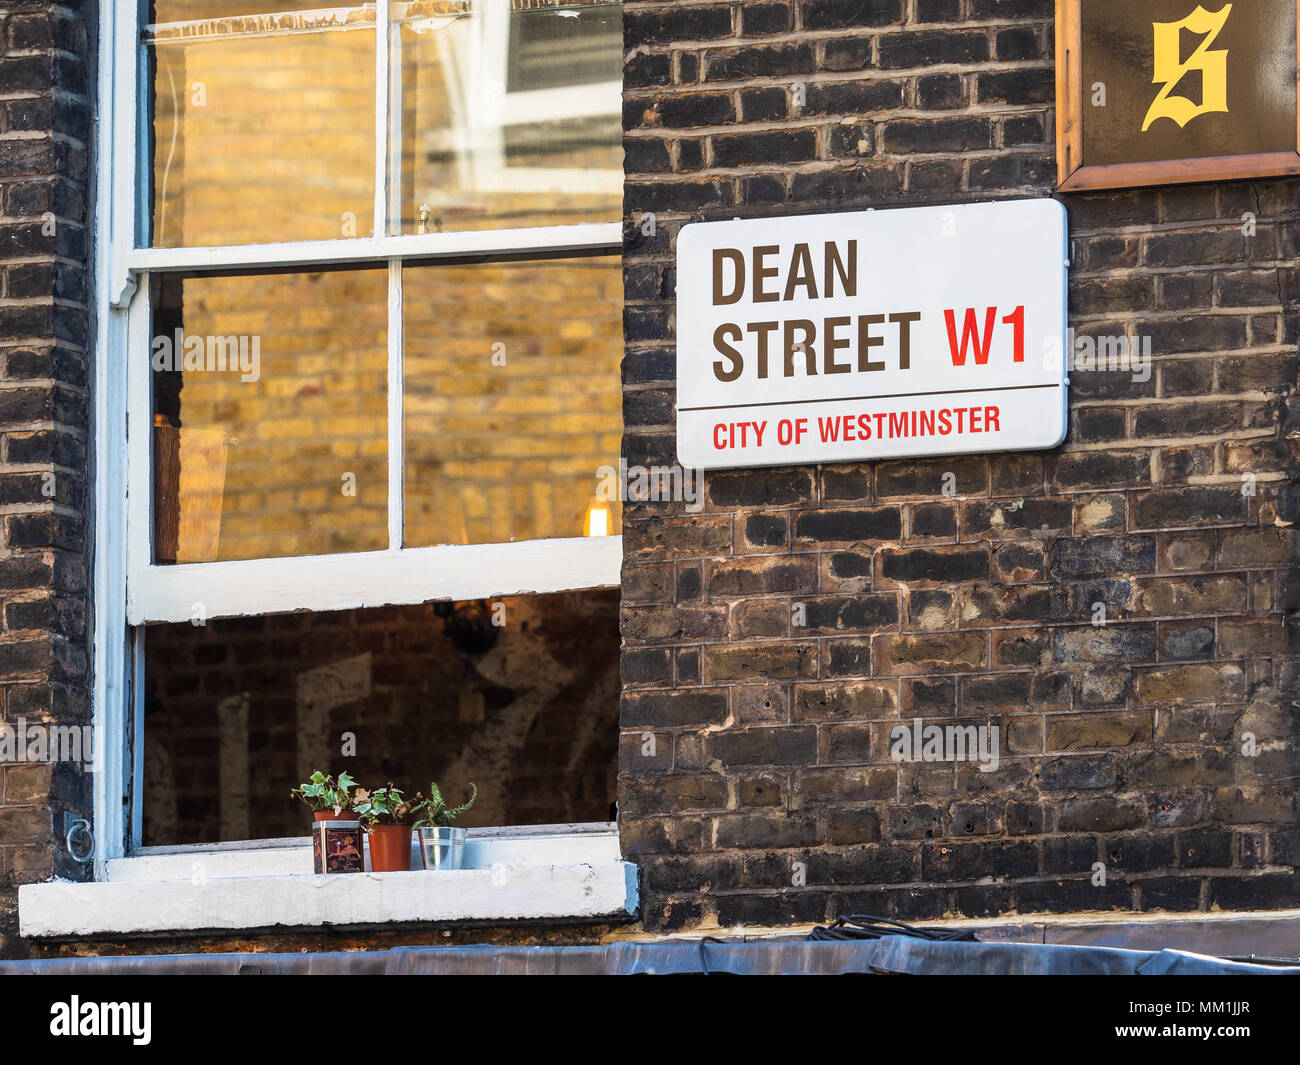 Soho Street serie di segni - Dean Street / Dean St - Londra quartiere Soho di segnaletica stradale Foto Stock